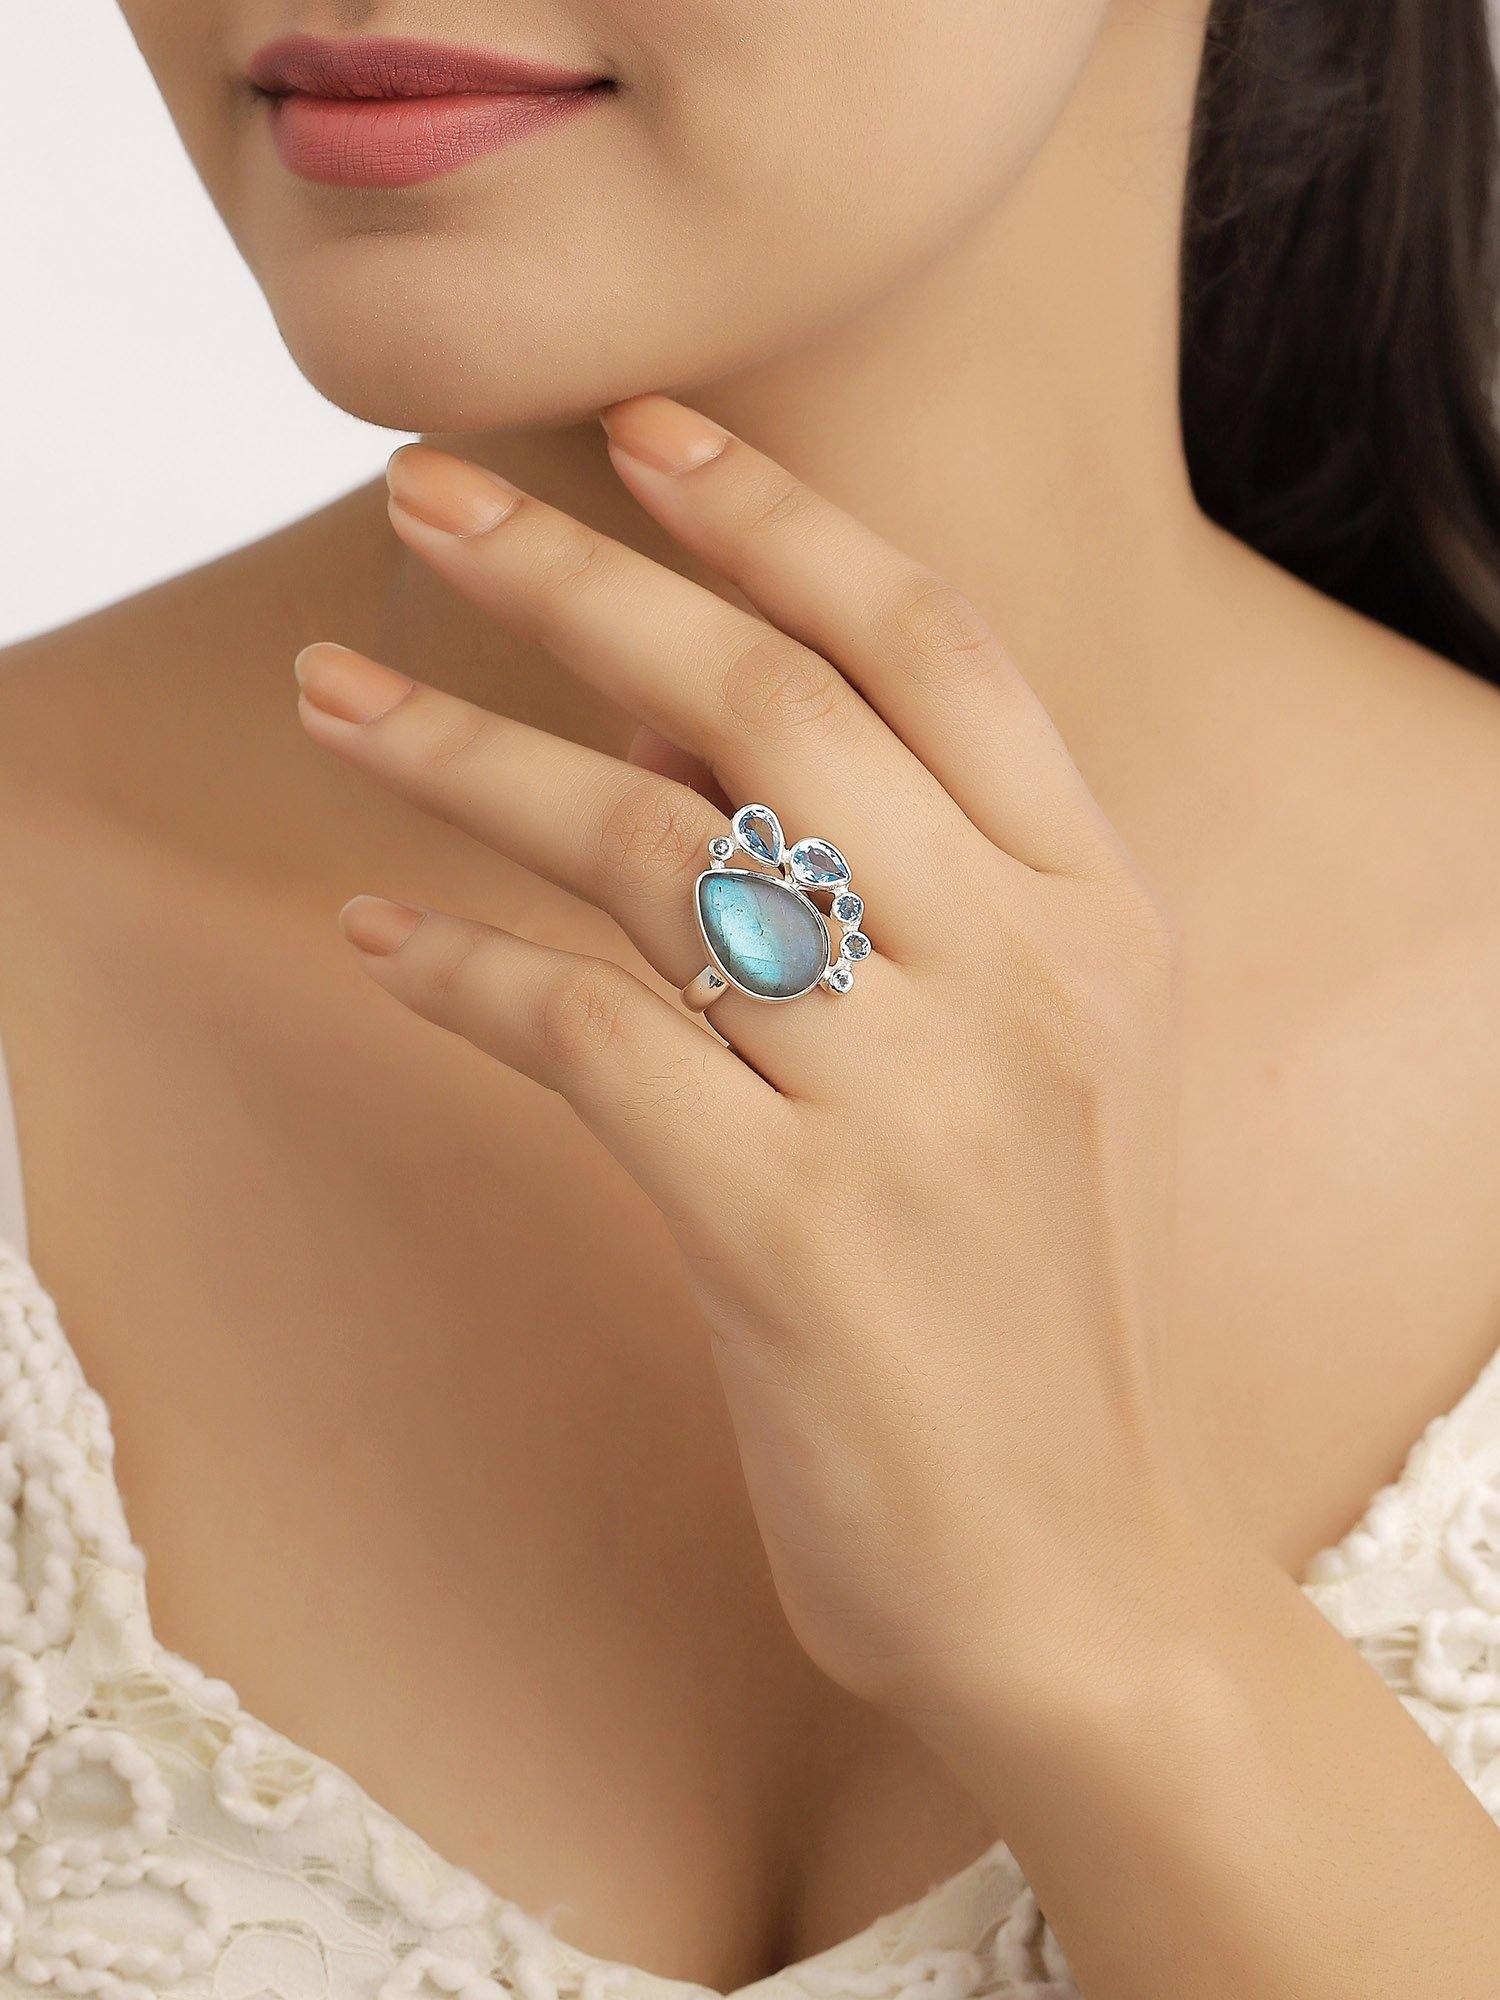 Labradorite Blue Topaz Solid 925 Sterling Silver Gemstone Ring Jewelry - YoTreasure